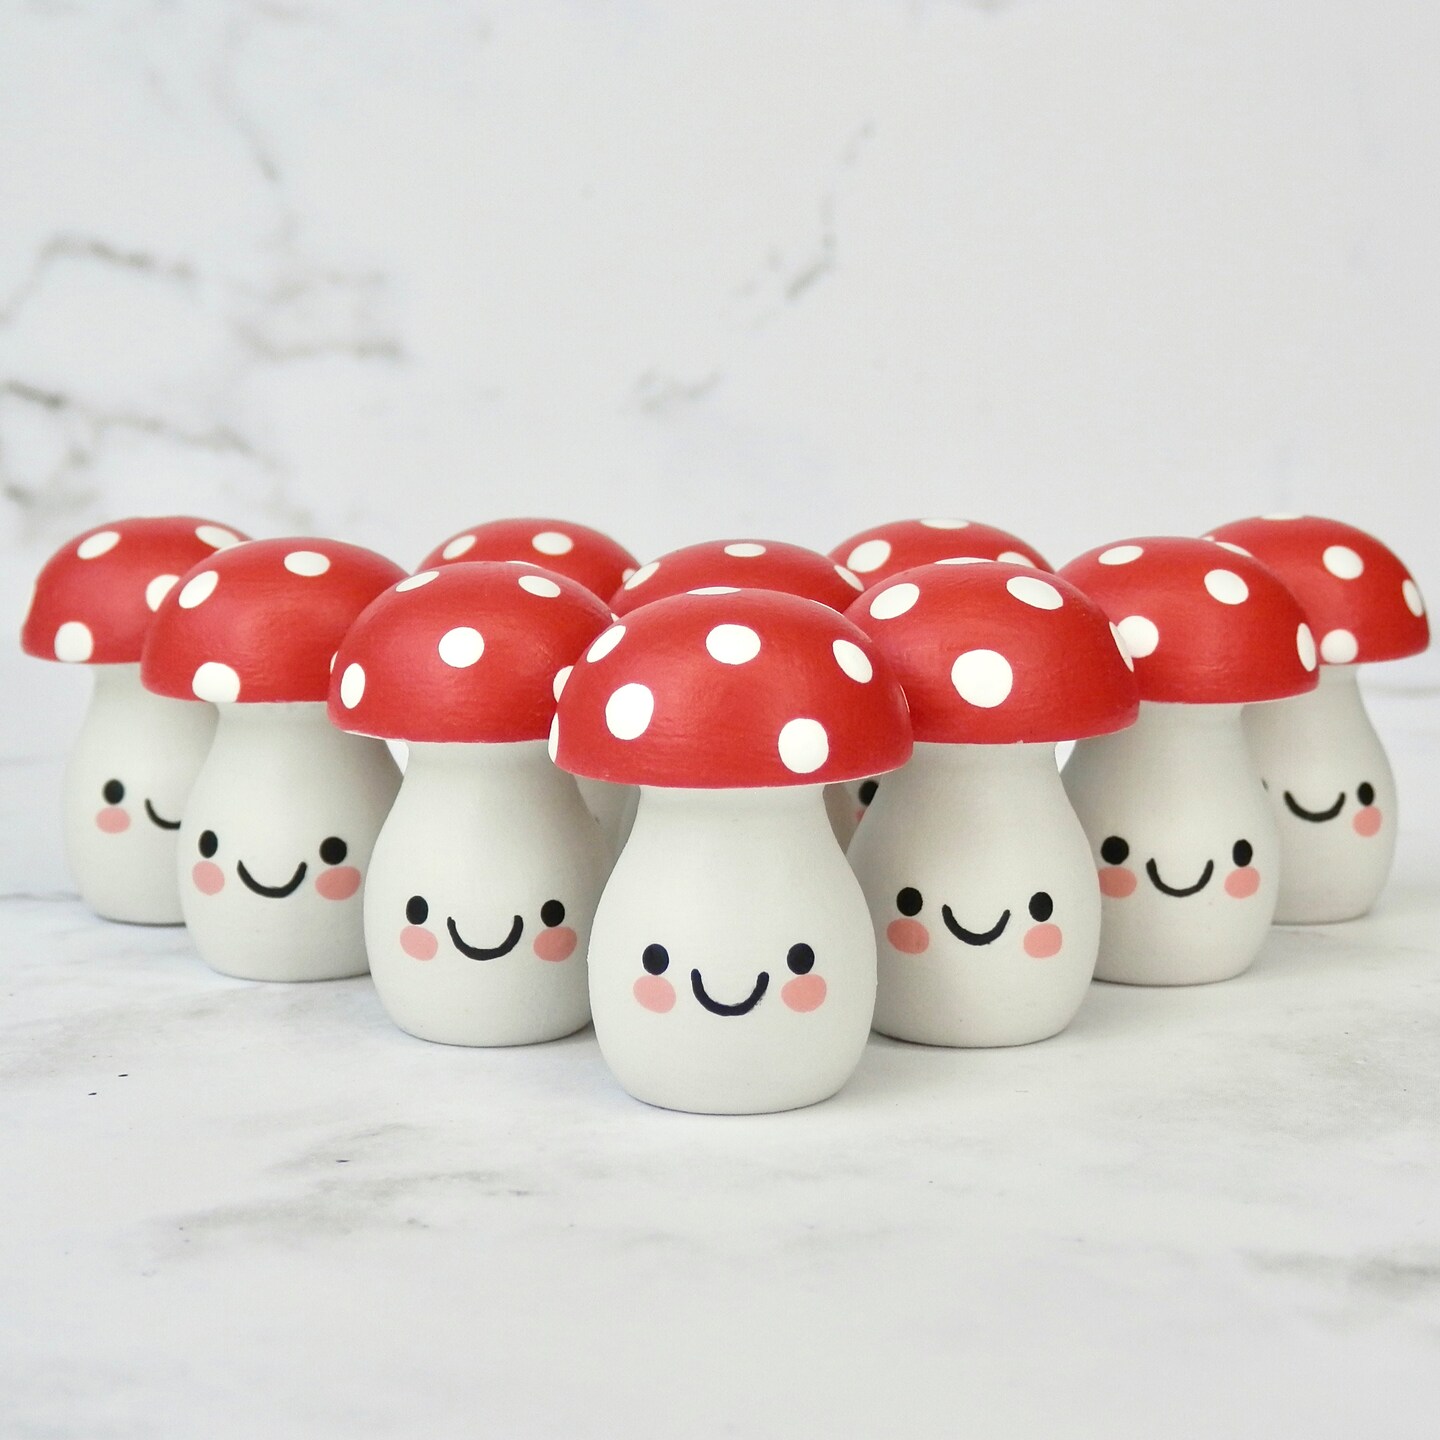 Wooden Mushroom Friend | Whimsical Woodland Toy 224158982543589377